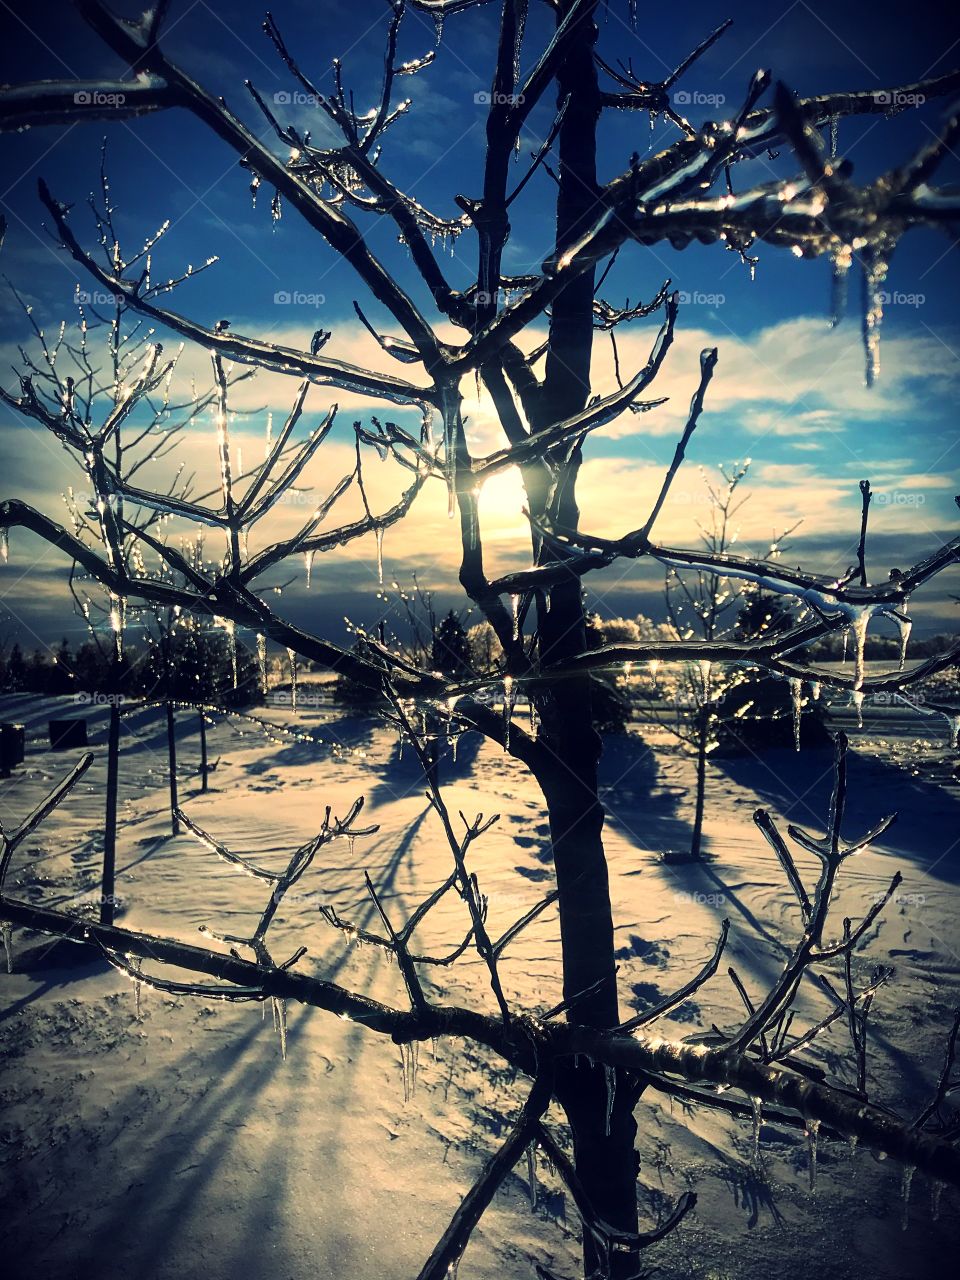 Winter nature